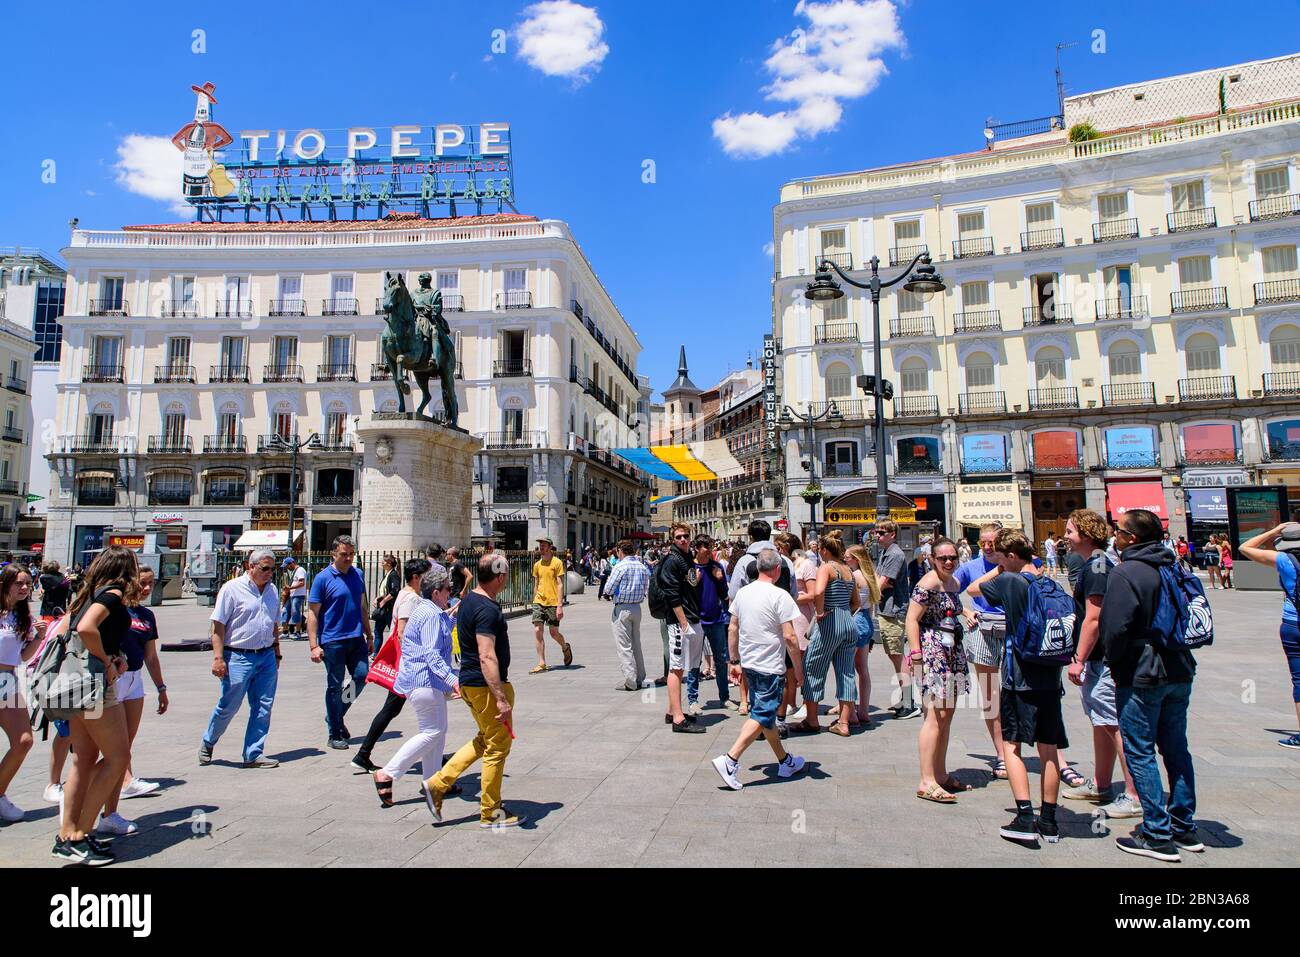 Puerta del sol (Gate of the Sun), a public square in Madrid, Spain Stock Photo